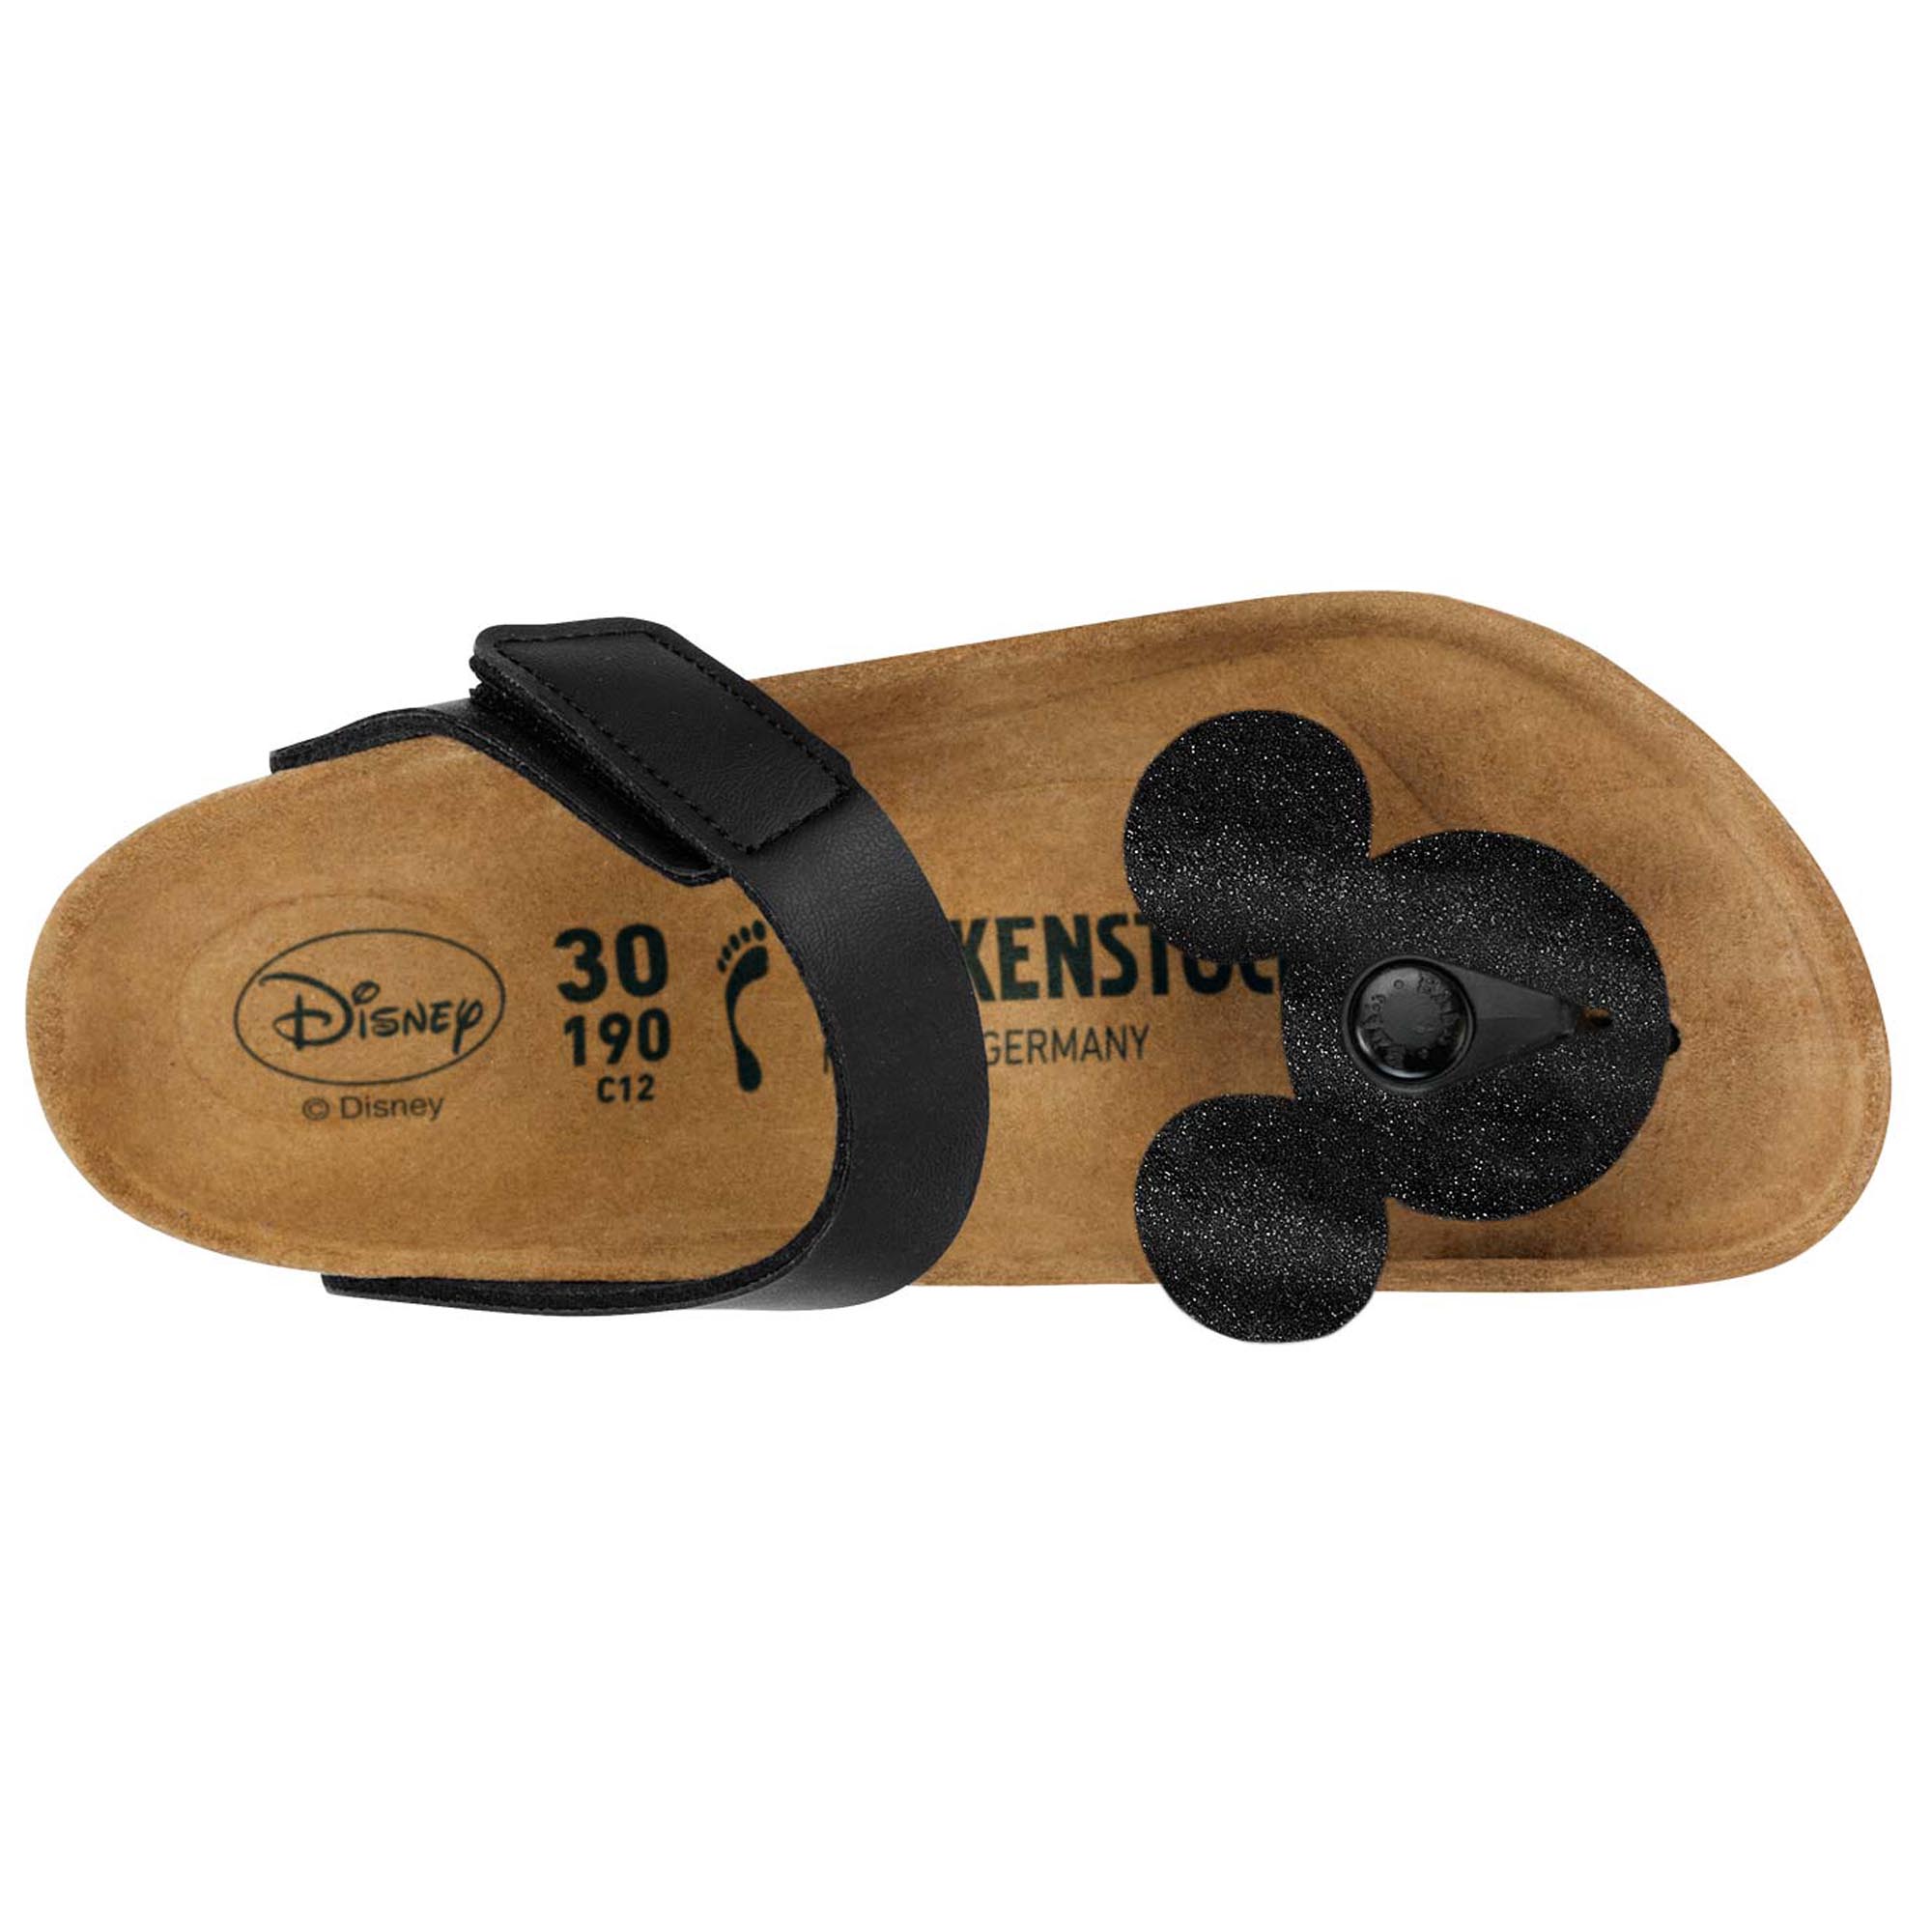 birkenstock mickey mouse sandals